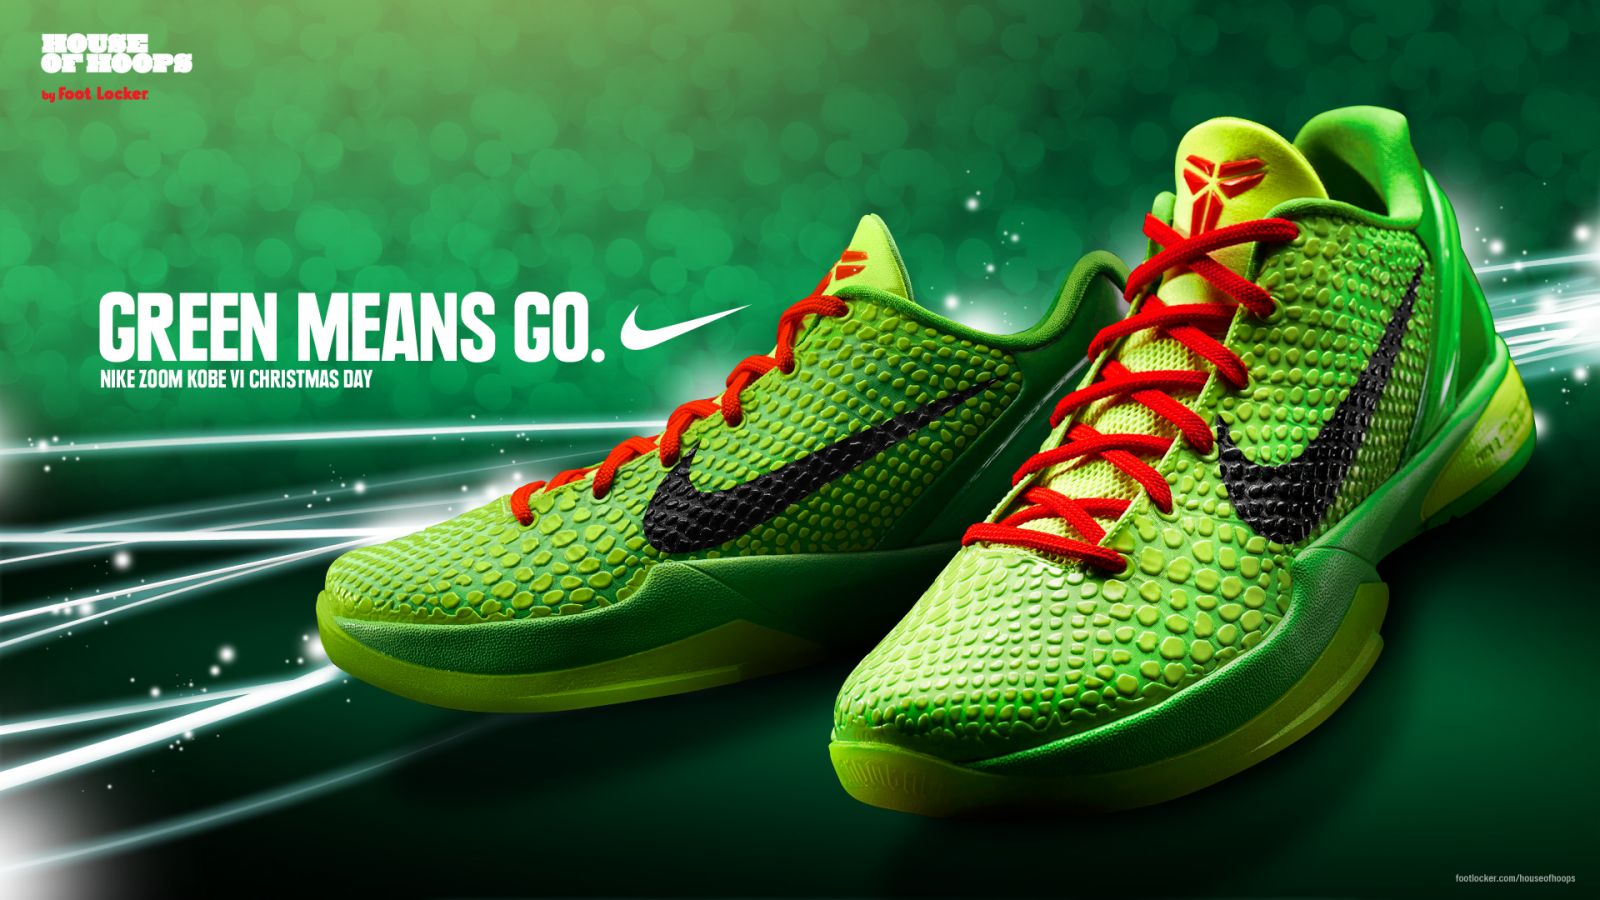 Nike Zoom Kobe VI - "Green Means Go"